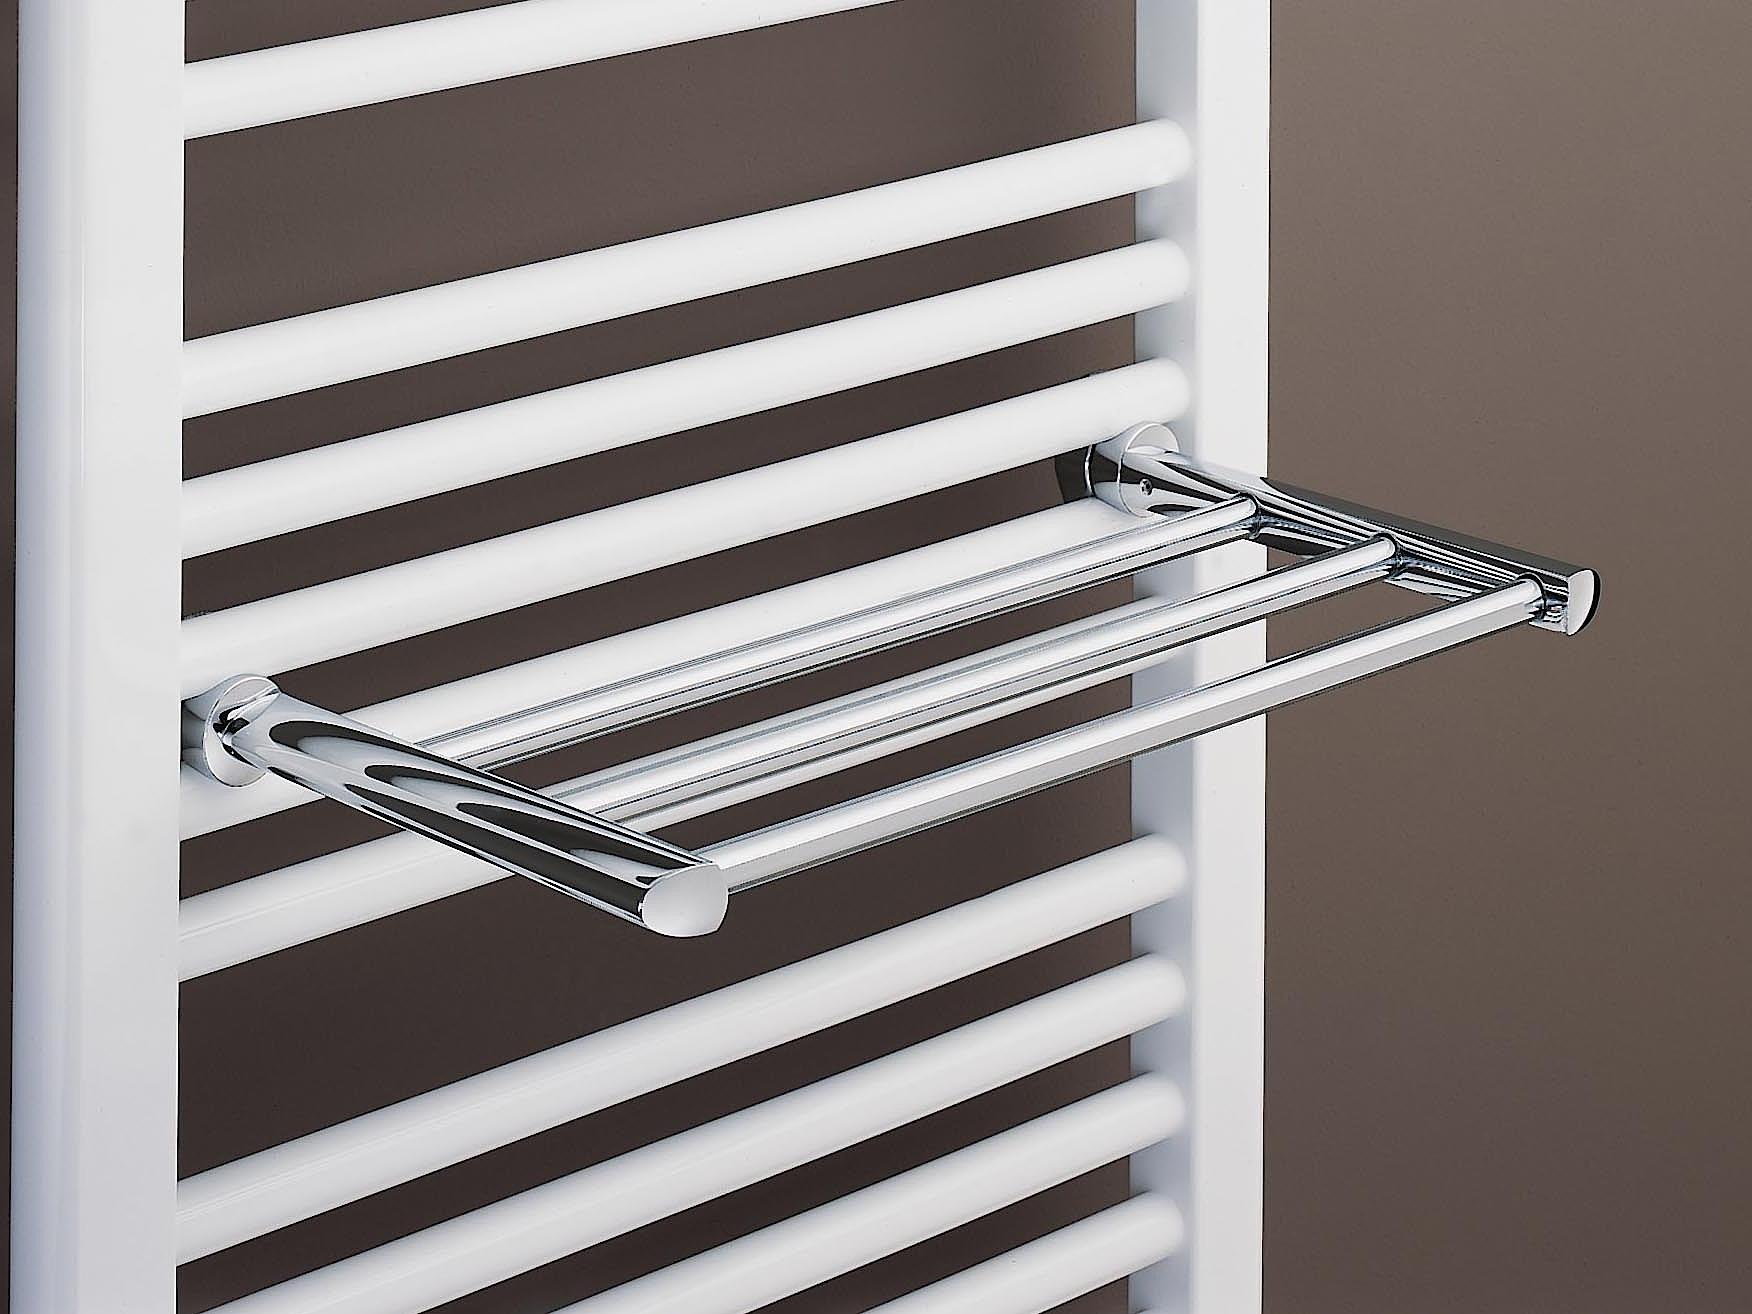 Towel shelf for Kermi Basic-50 designer and bathroom radiators, Painted Aluminium or Chrome-plated.